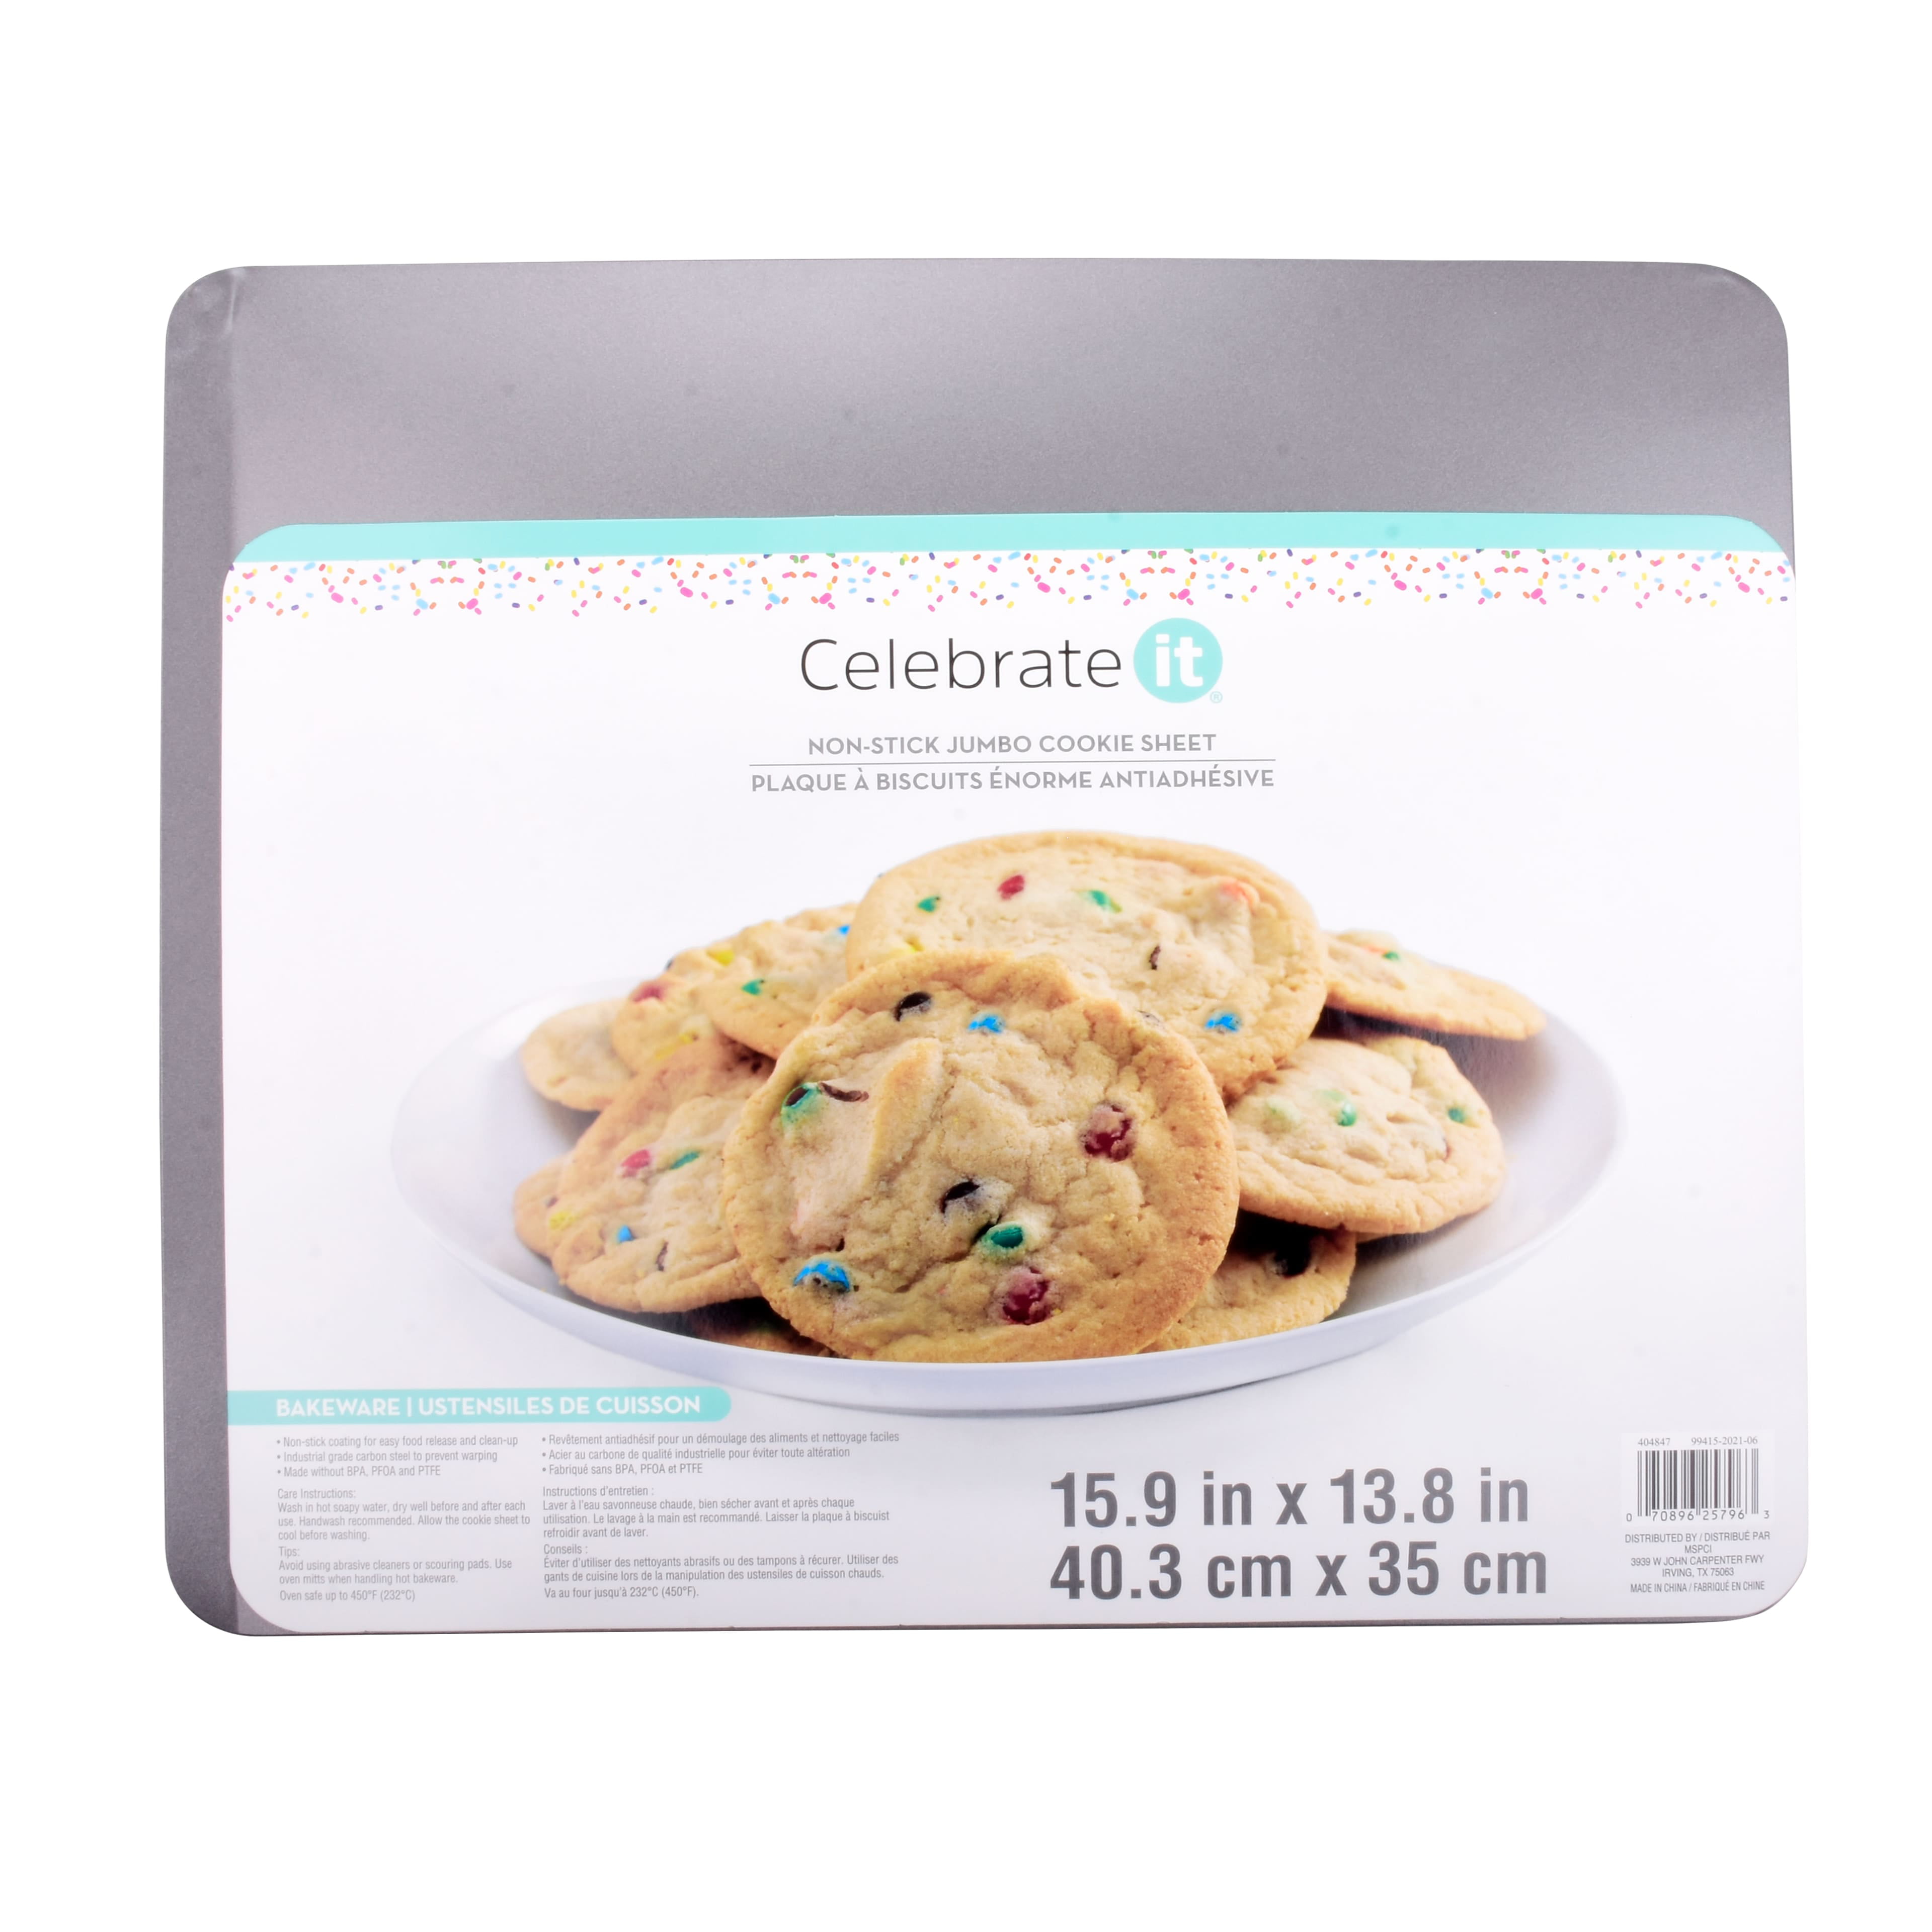 Wilton Air Bake Insulated Cookie Sheet 14”x 9”